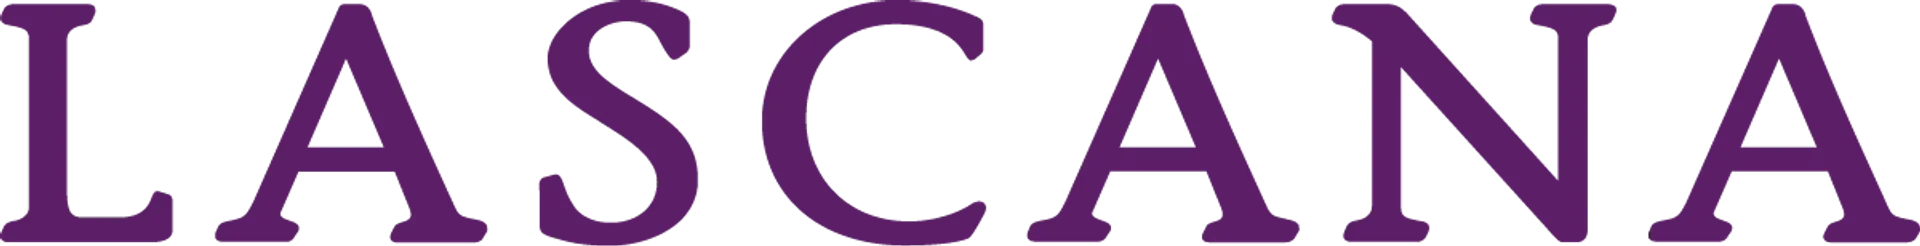 LASCANA logo